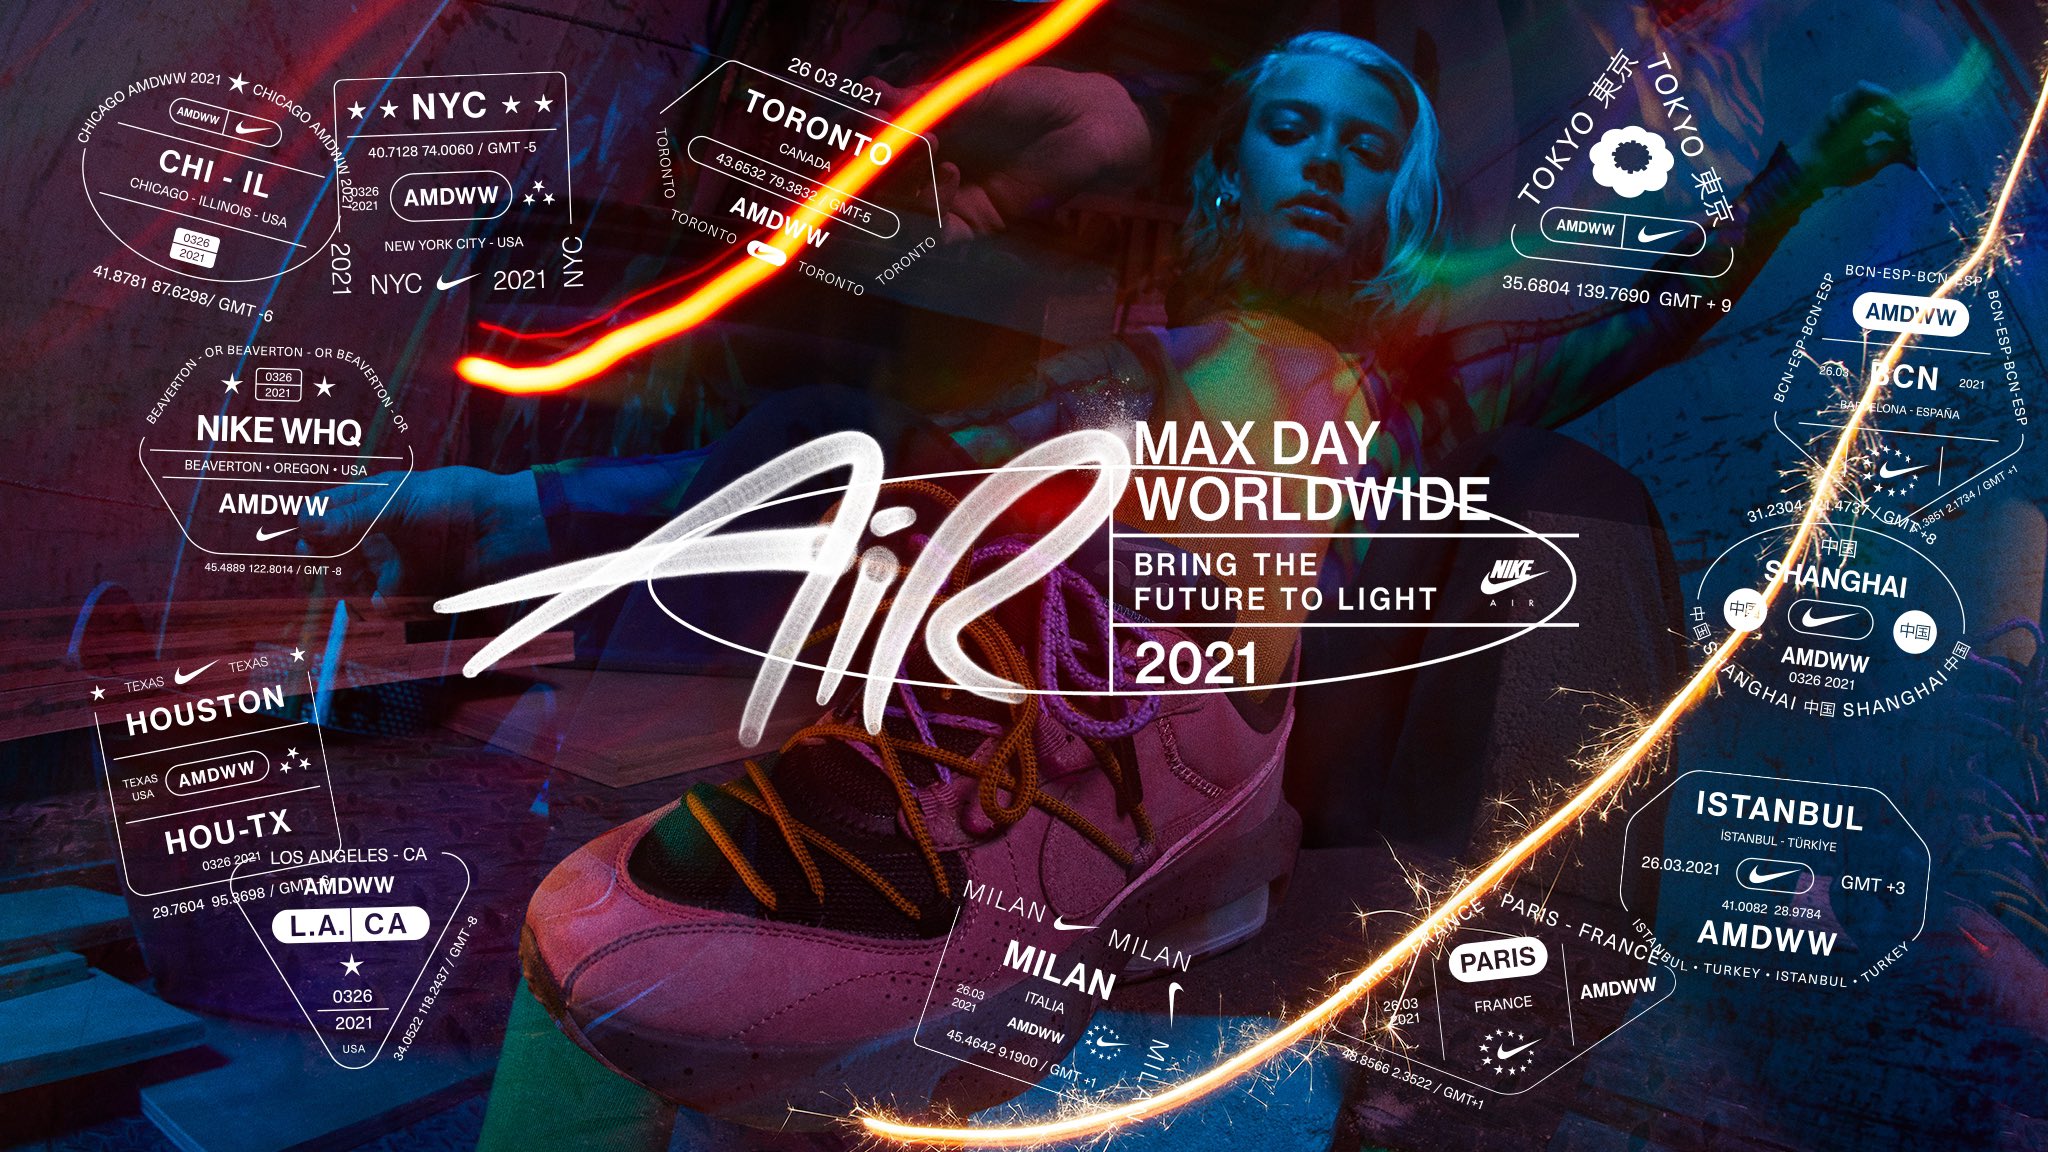 US11 on Max Day Worldwide 2021 - Nike News https://t.co/kjxYOoYusV" / Twitter